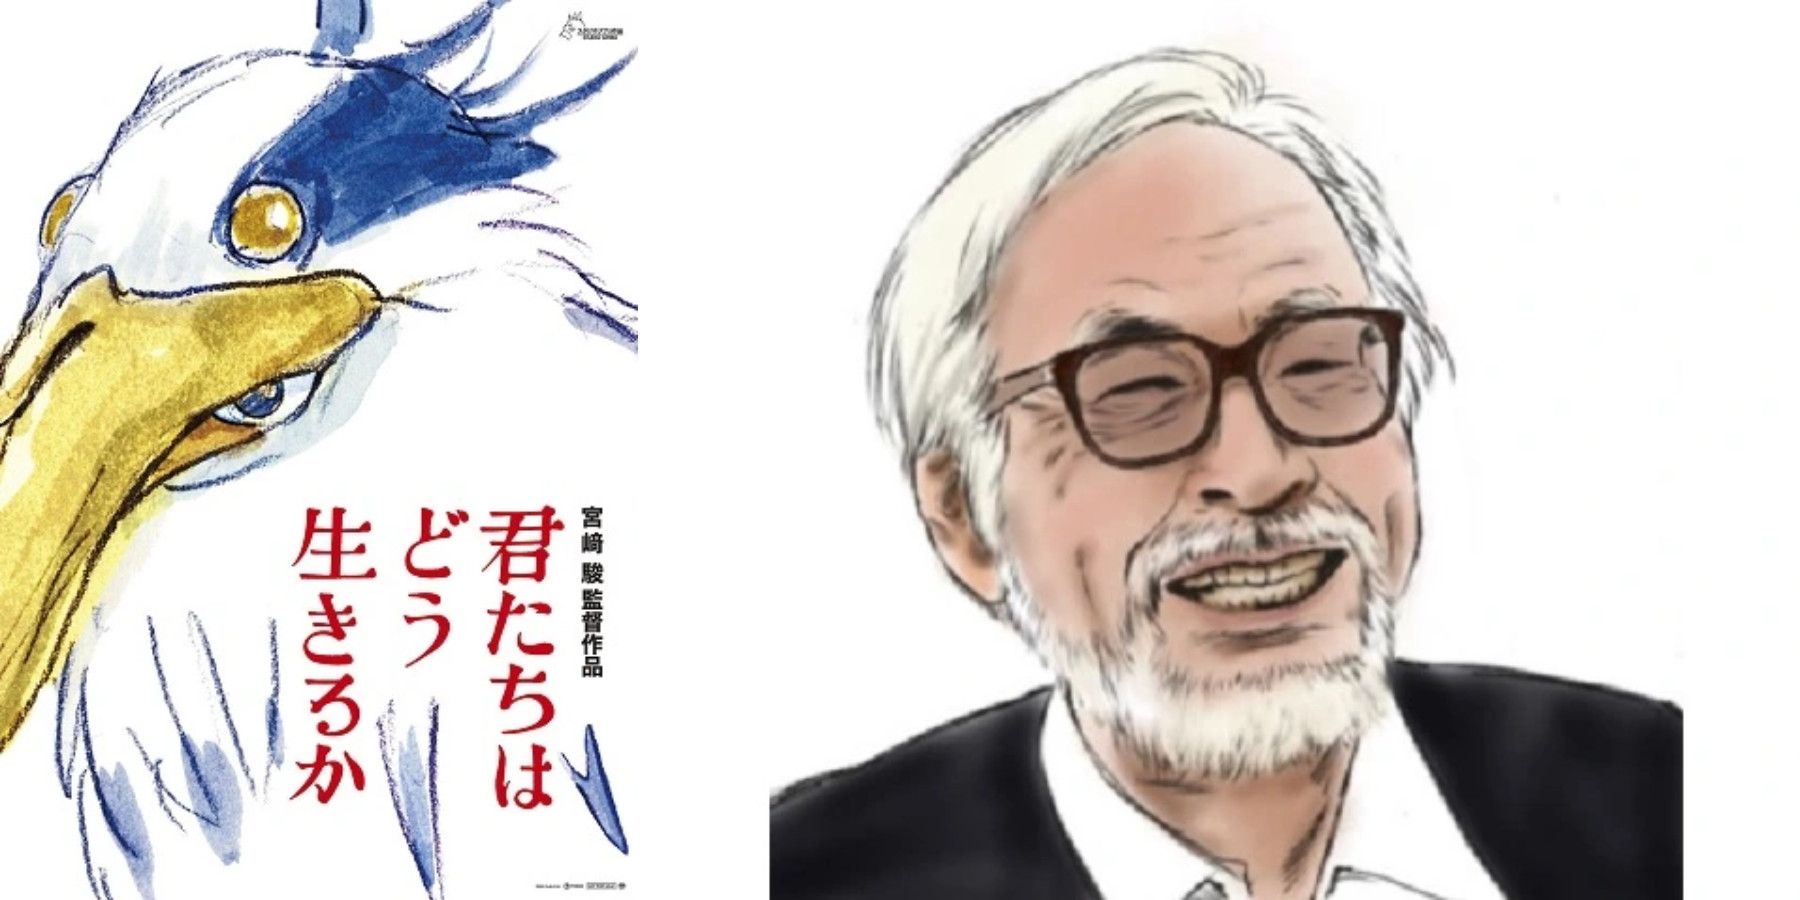 como-você-vive-studio-ghibli-miyazaki